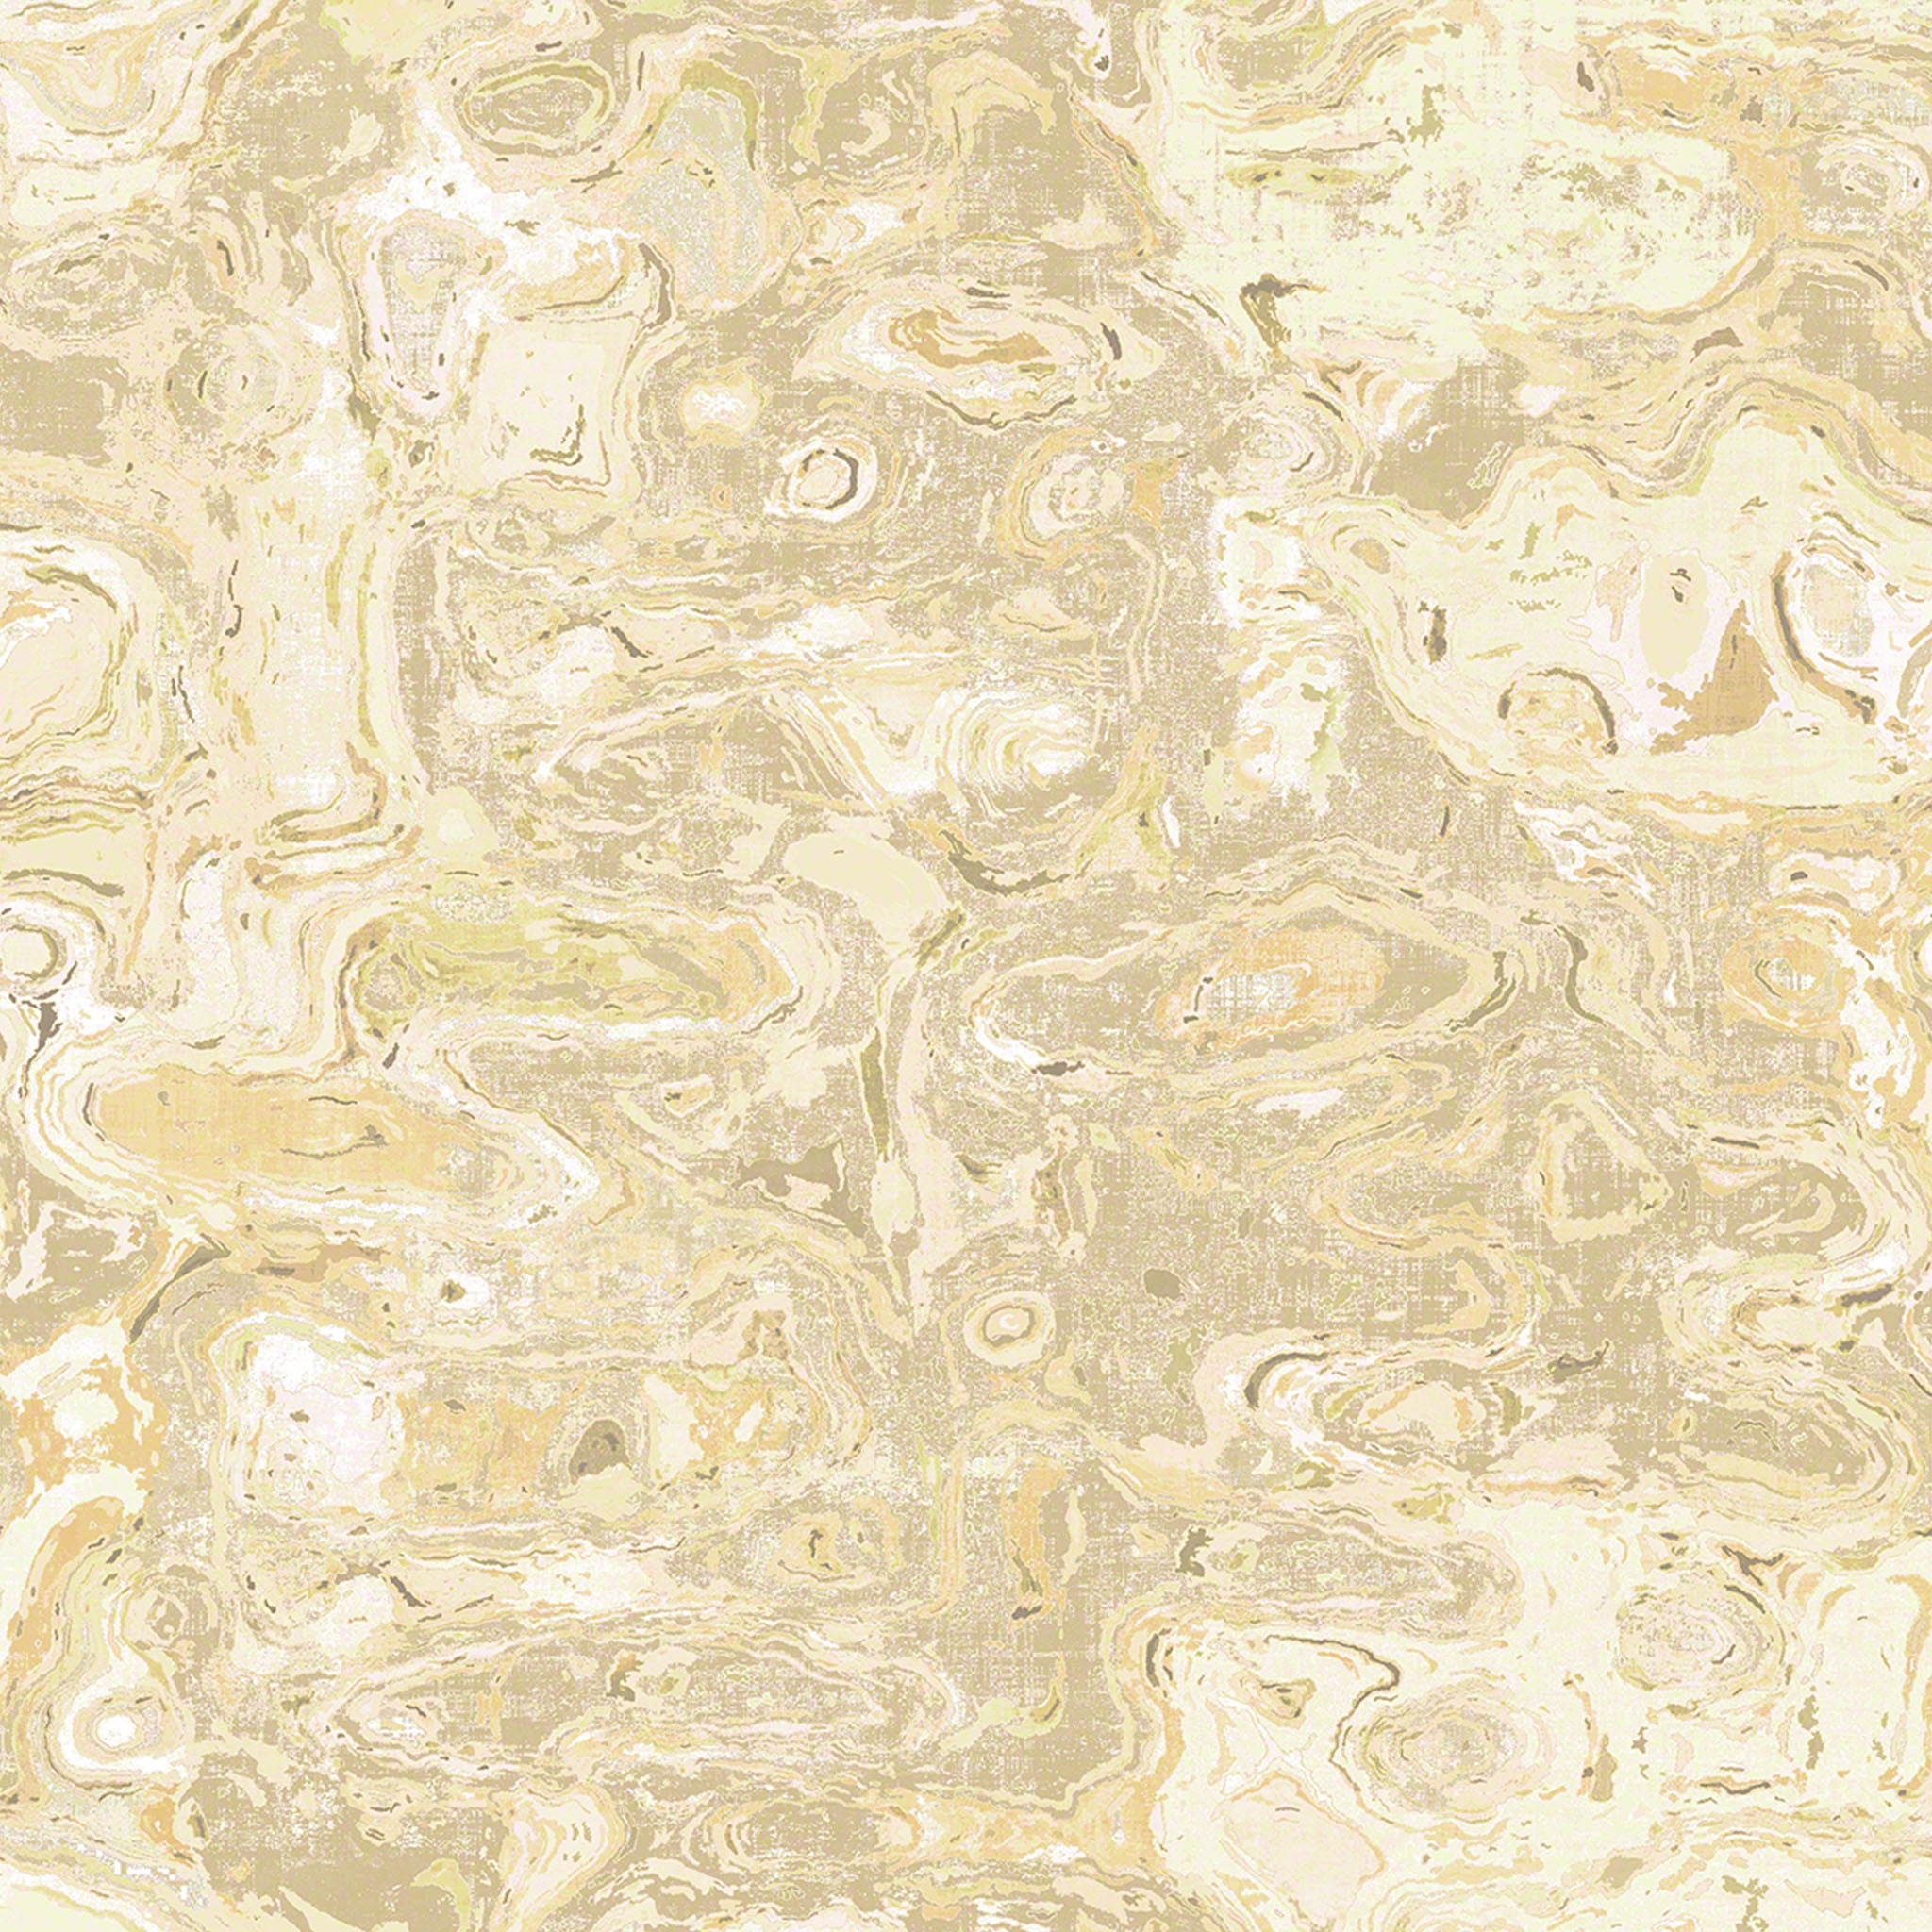 Lavalamp Wallpaper, 1 yard roll Gold